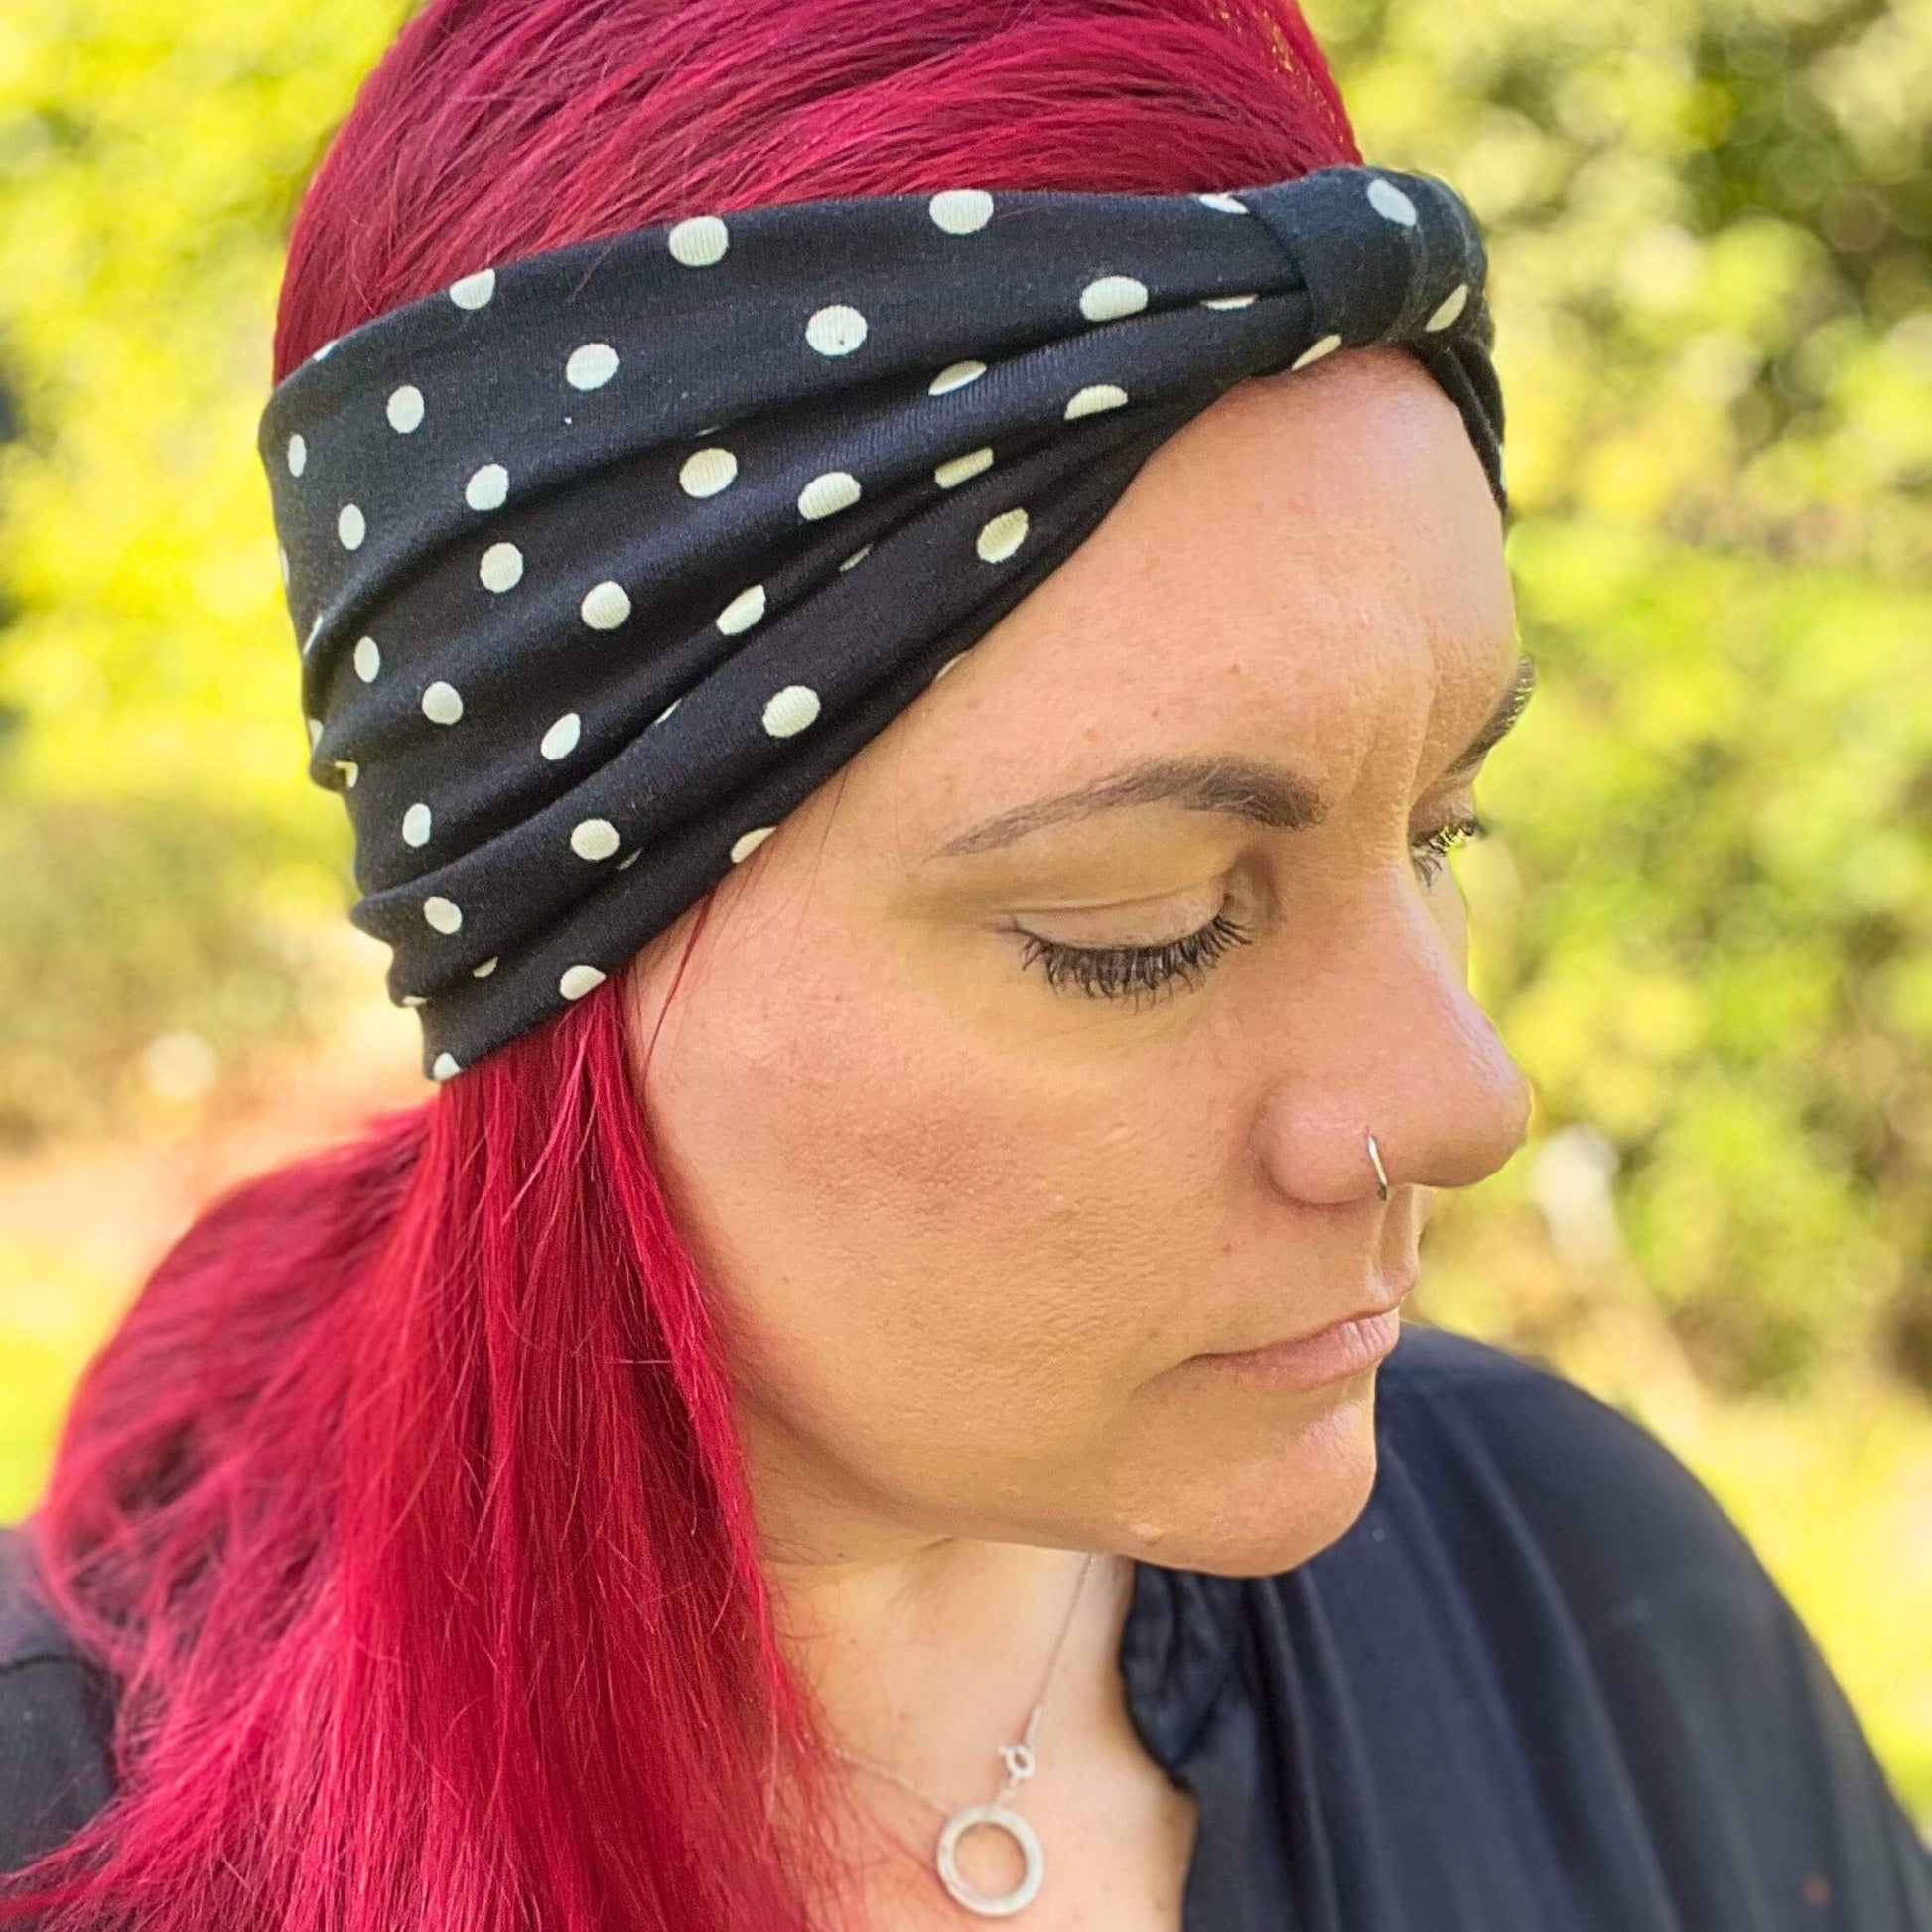 Black and White Polka Dot wide stretch headband for women